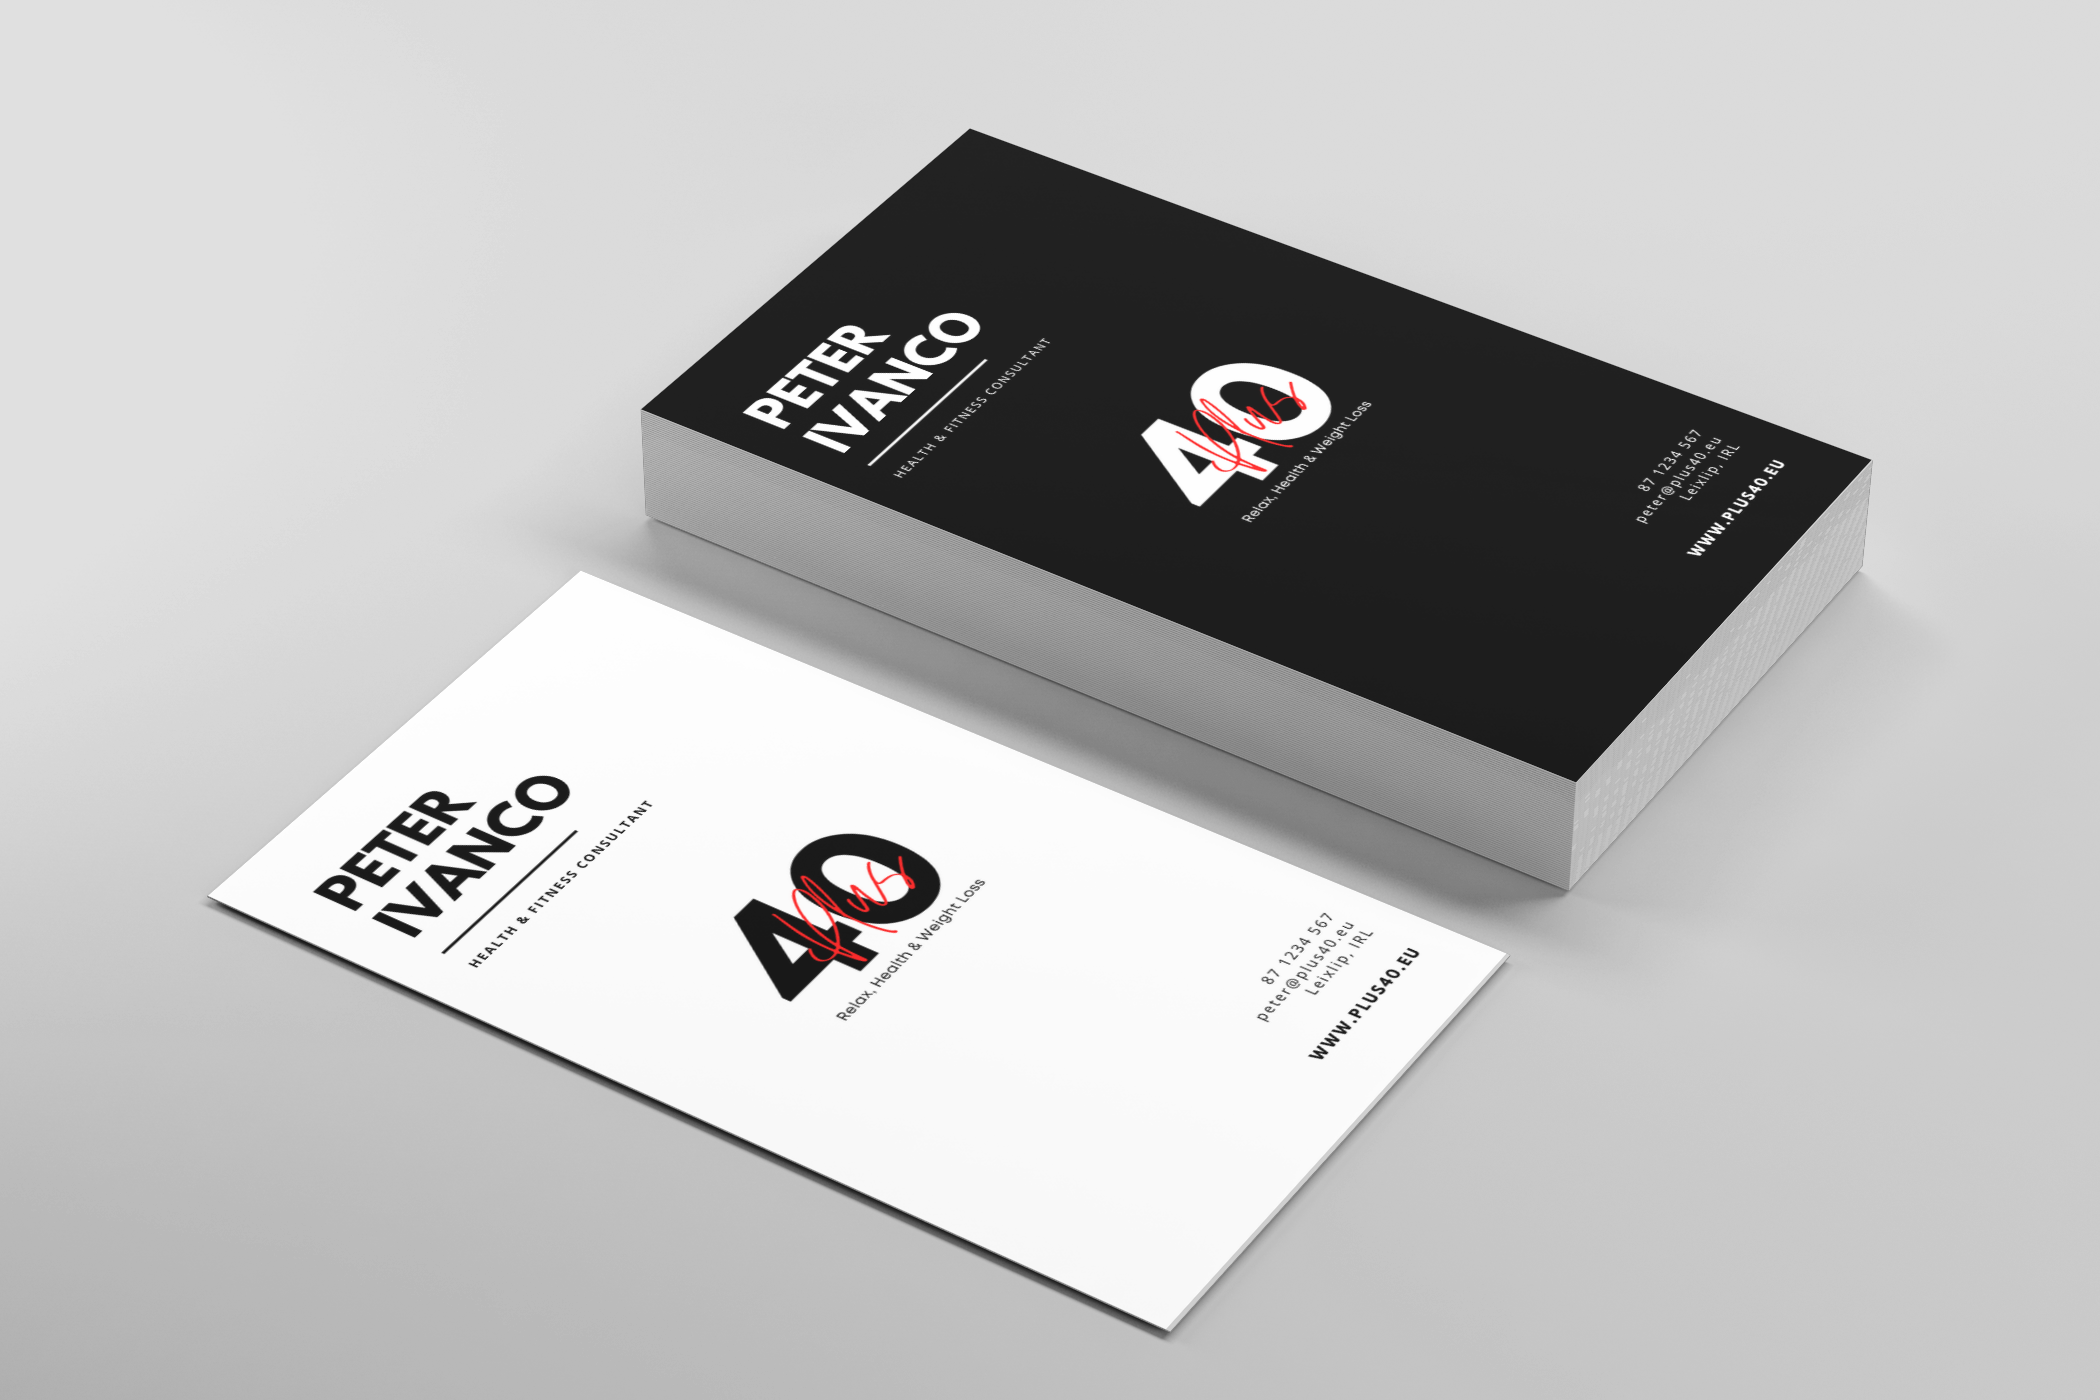 Business cards design